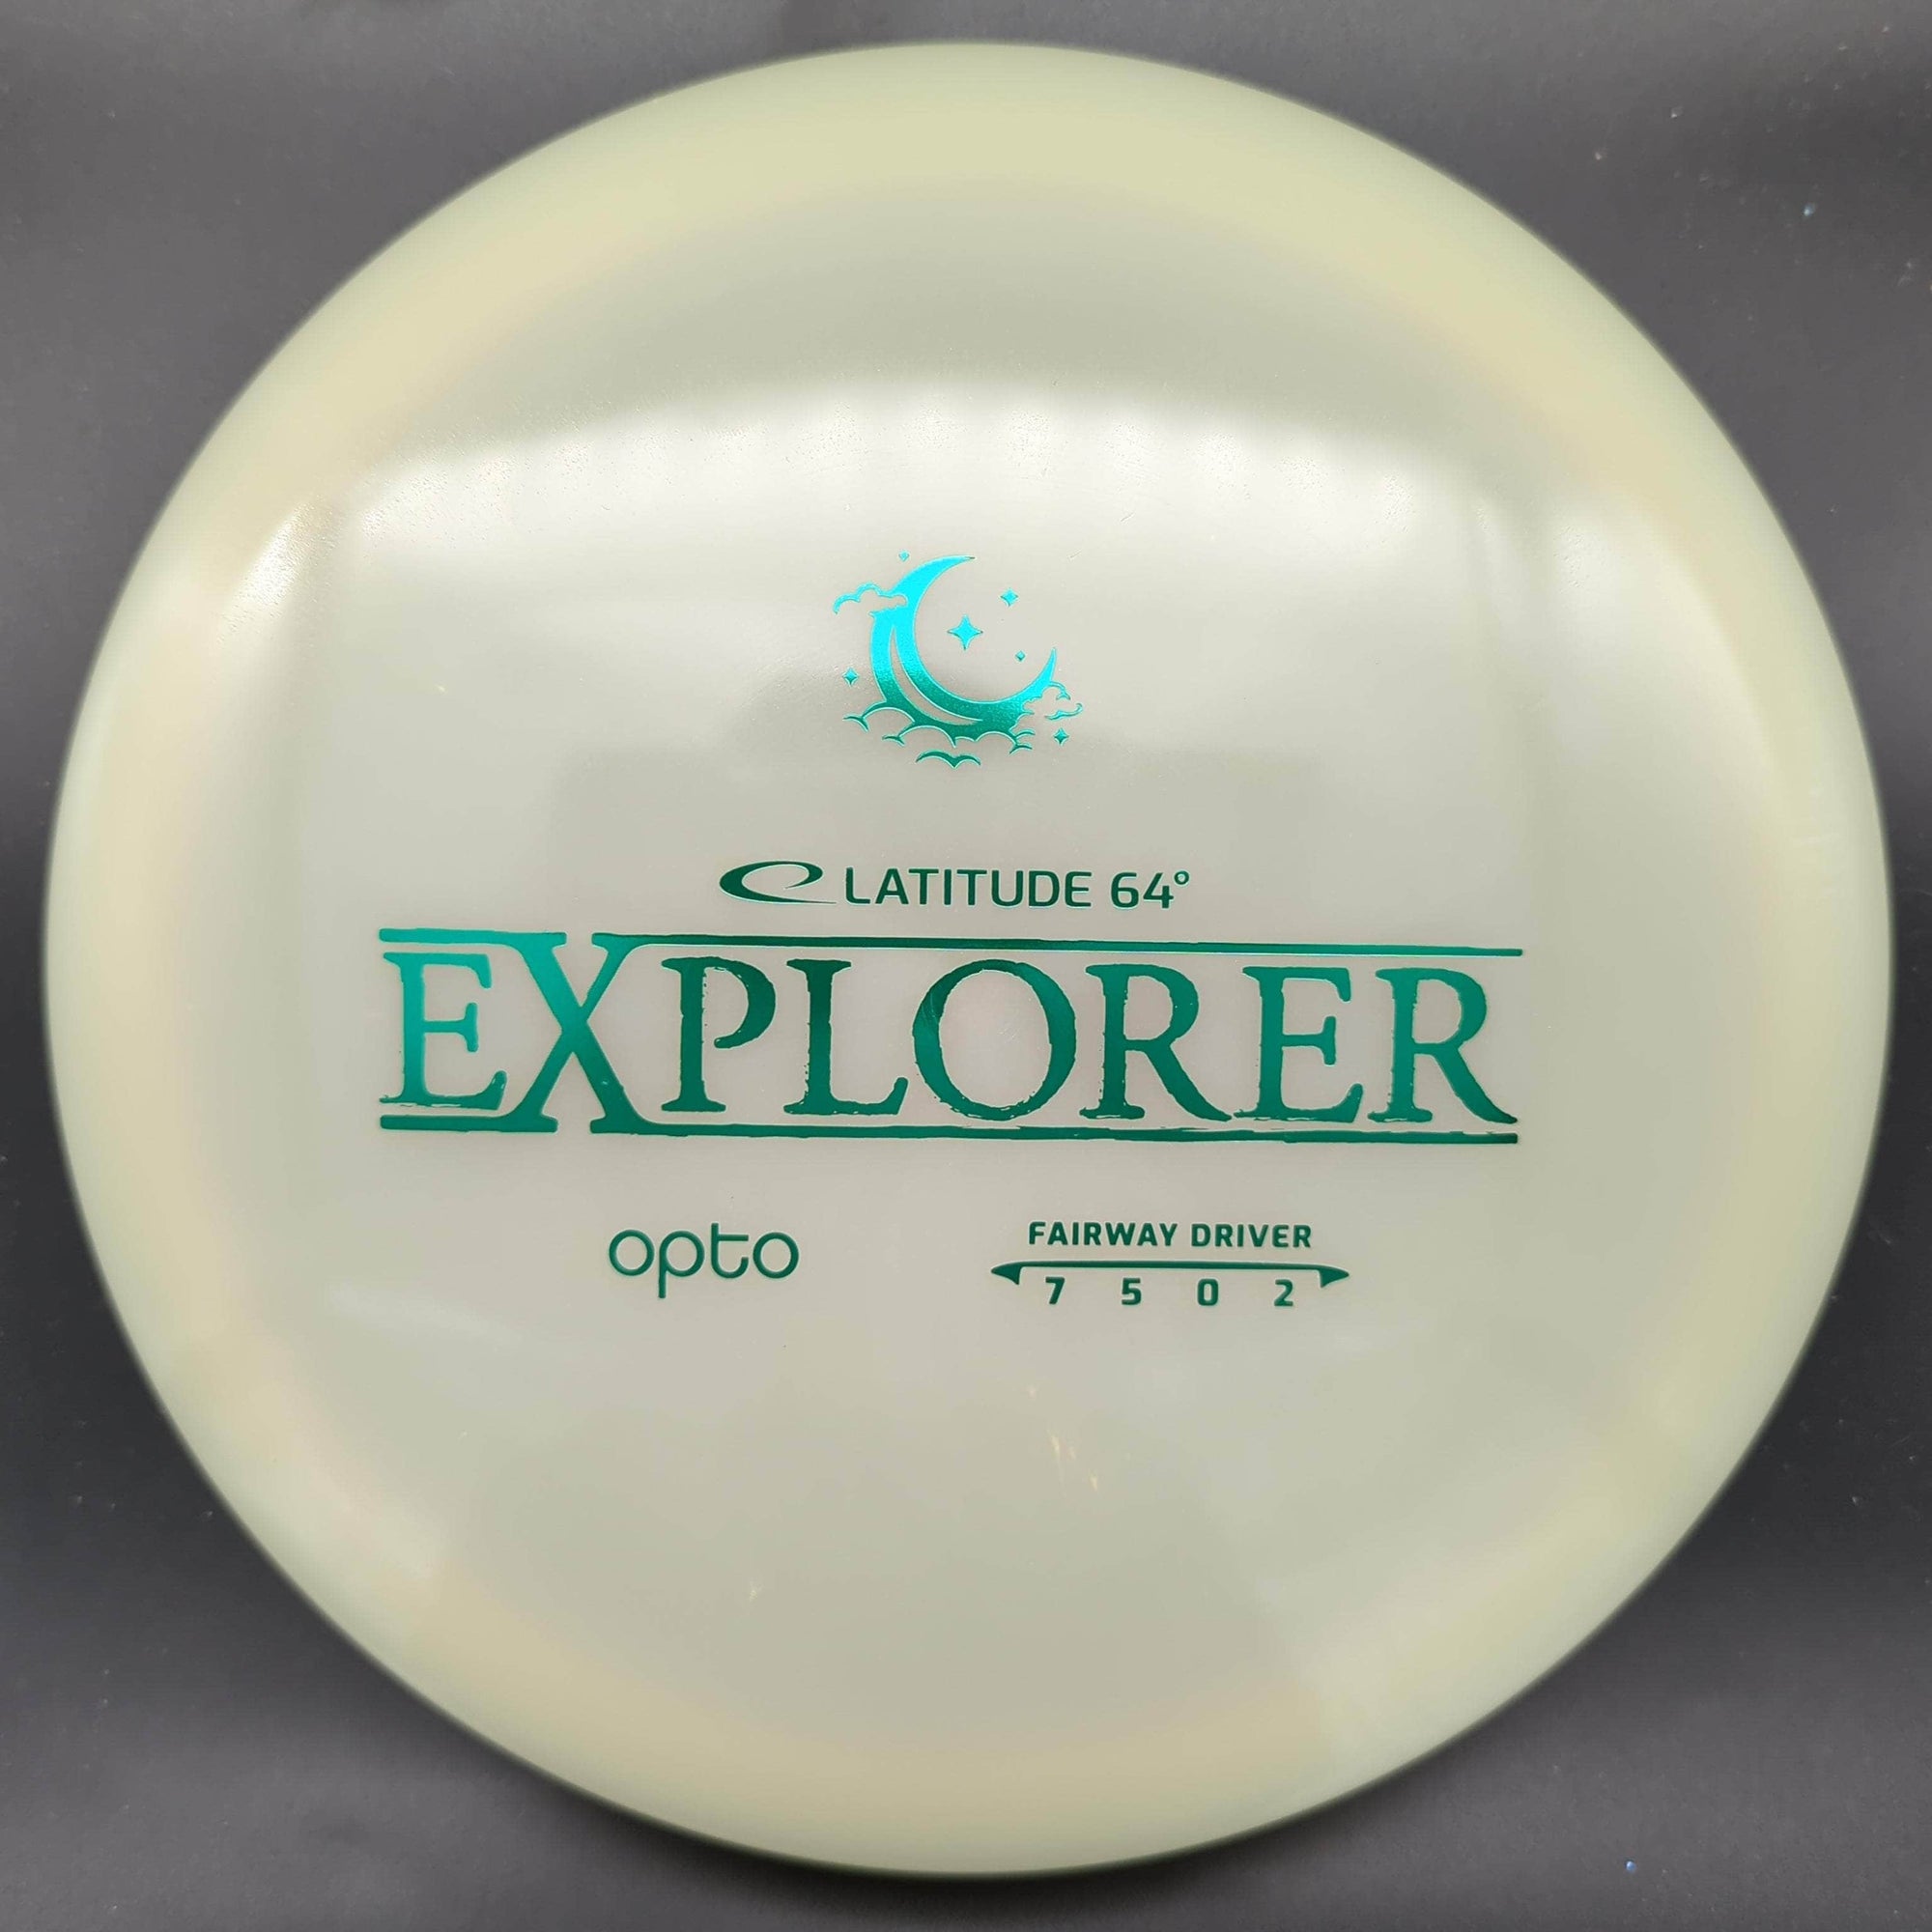 Latitude 64 Fairway Driver Explorer, Opto Moonshine, Glow Disc